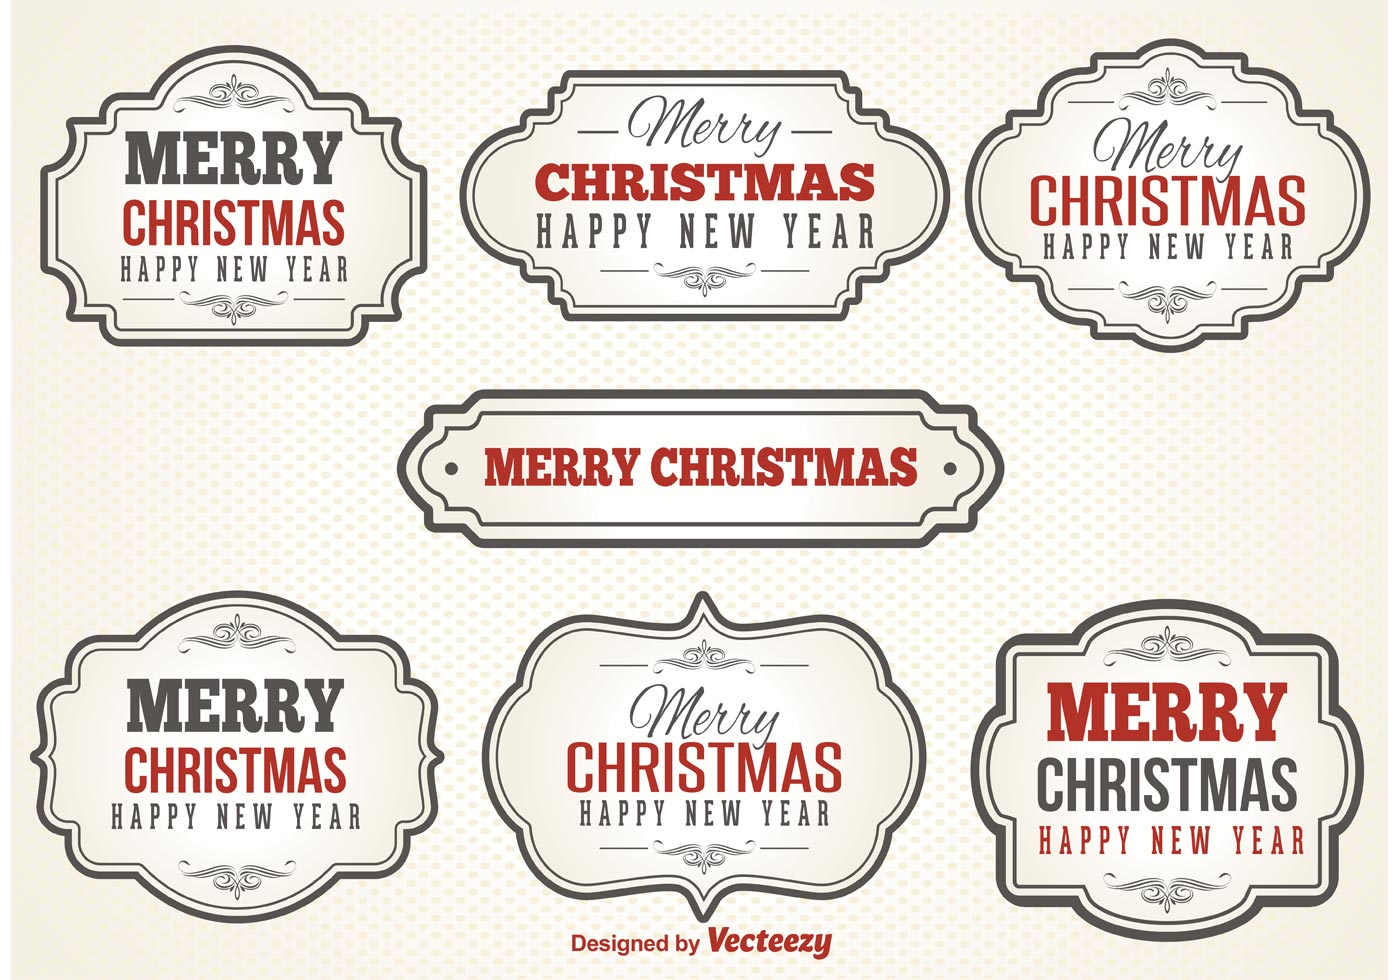 Download Vintage Christmas Labels - Download Free Vector Art, Stock ...